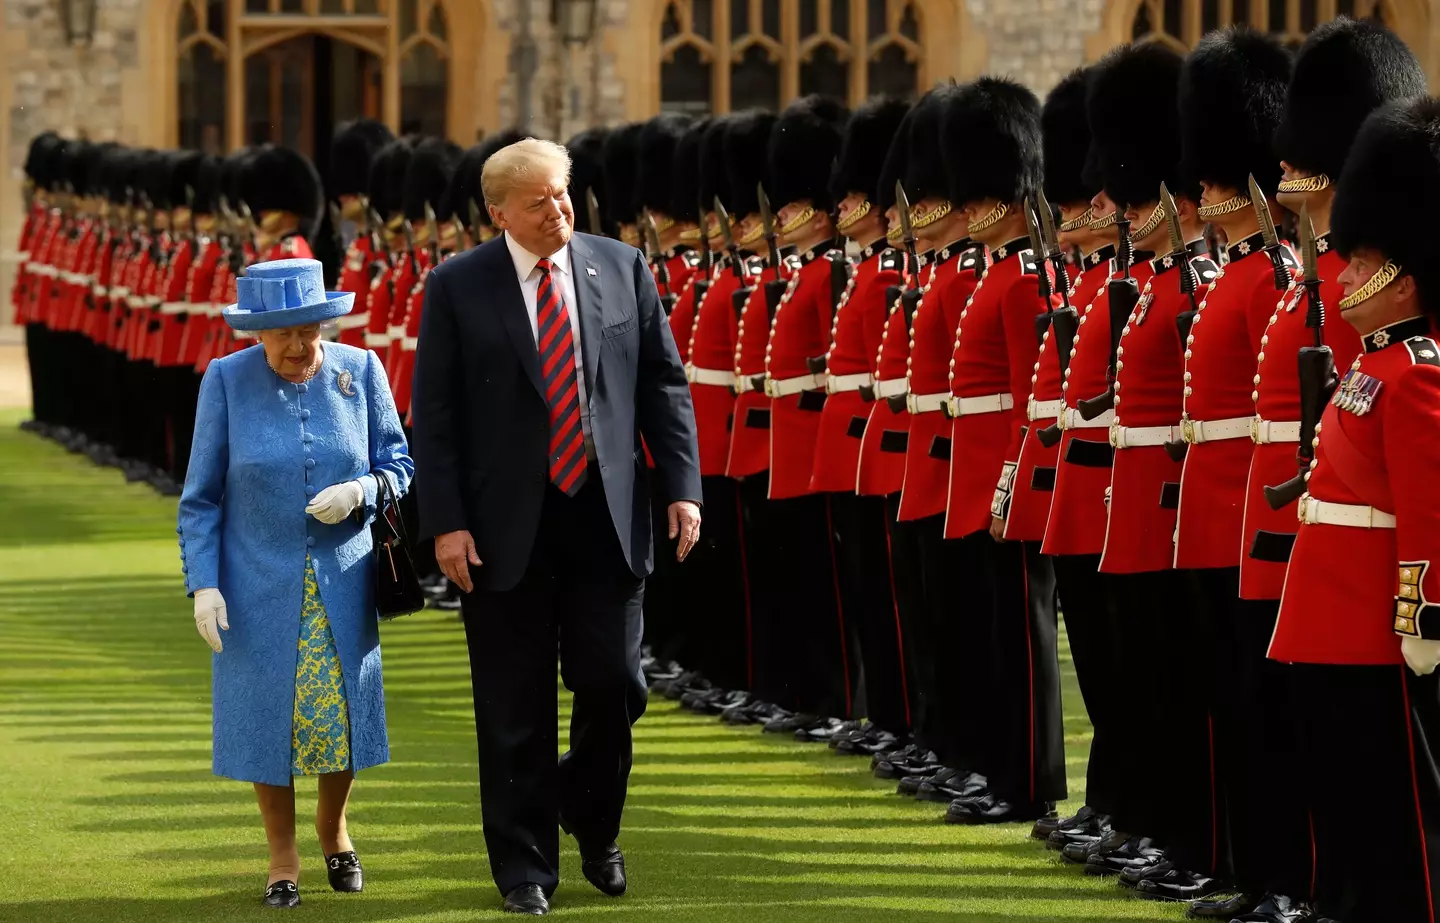 Trump walked slightly ahead of the Queen. (Matt Dunham - WPA Pool/Getty Images)